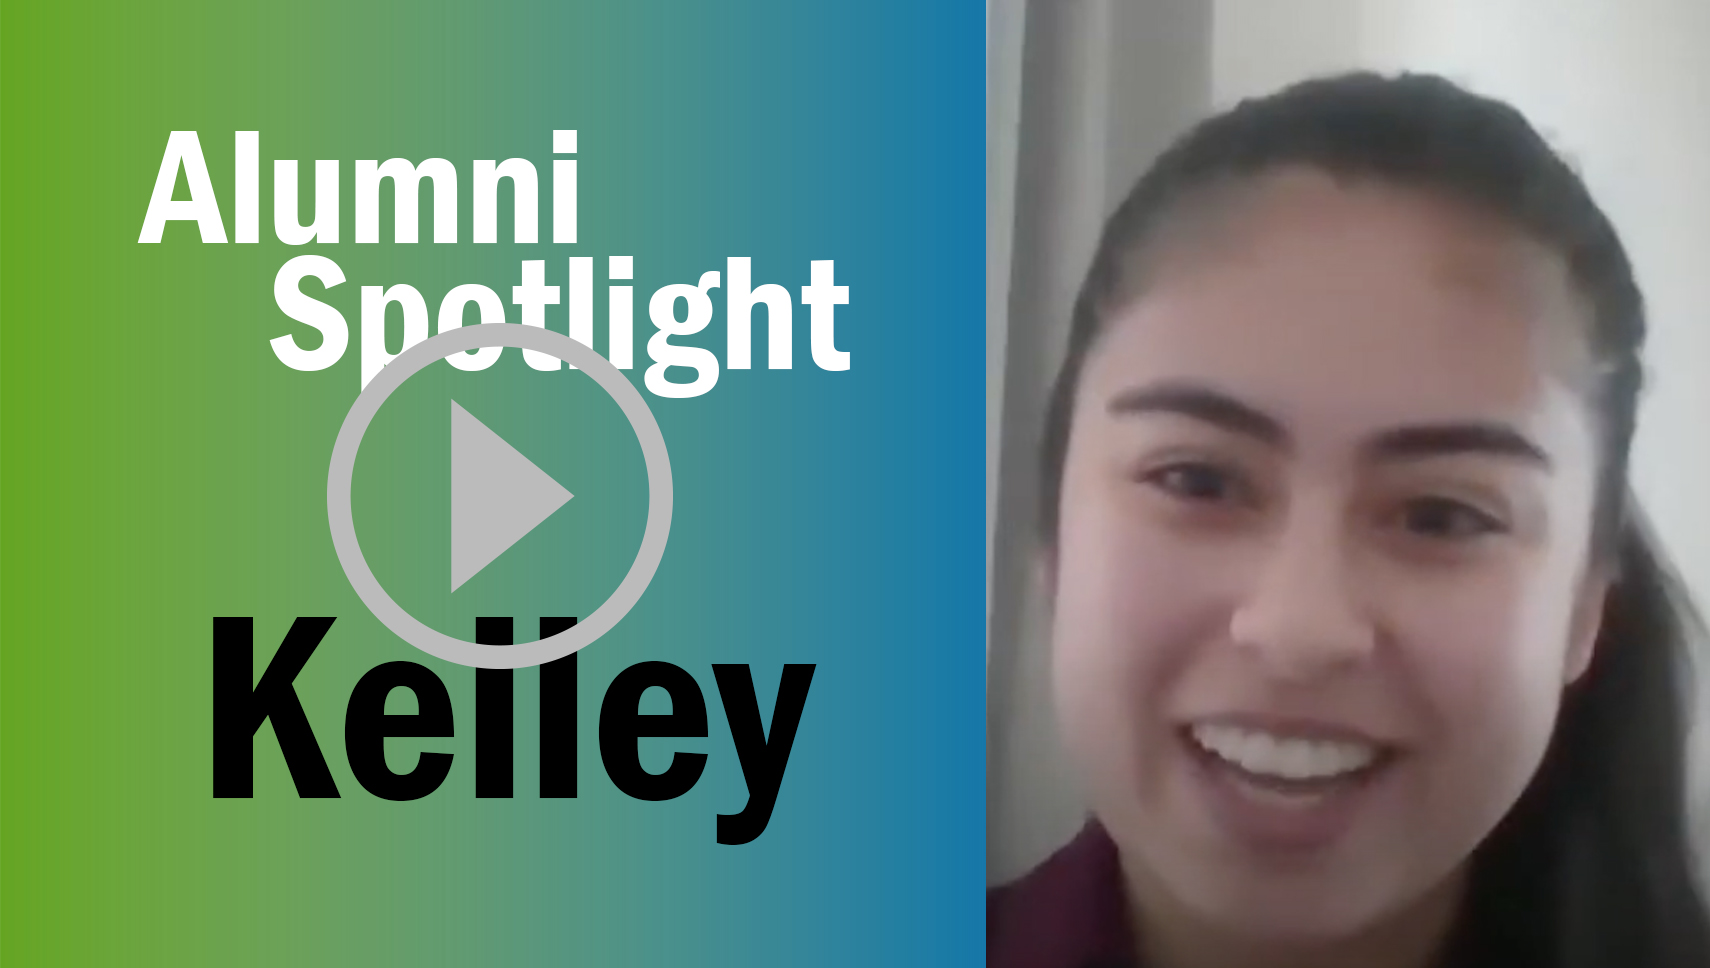 Click here to watch Kelley's Alumni Spotlight video